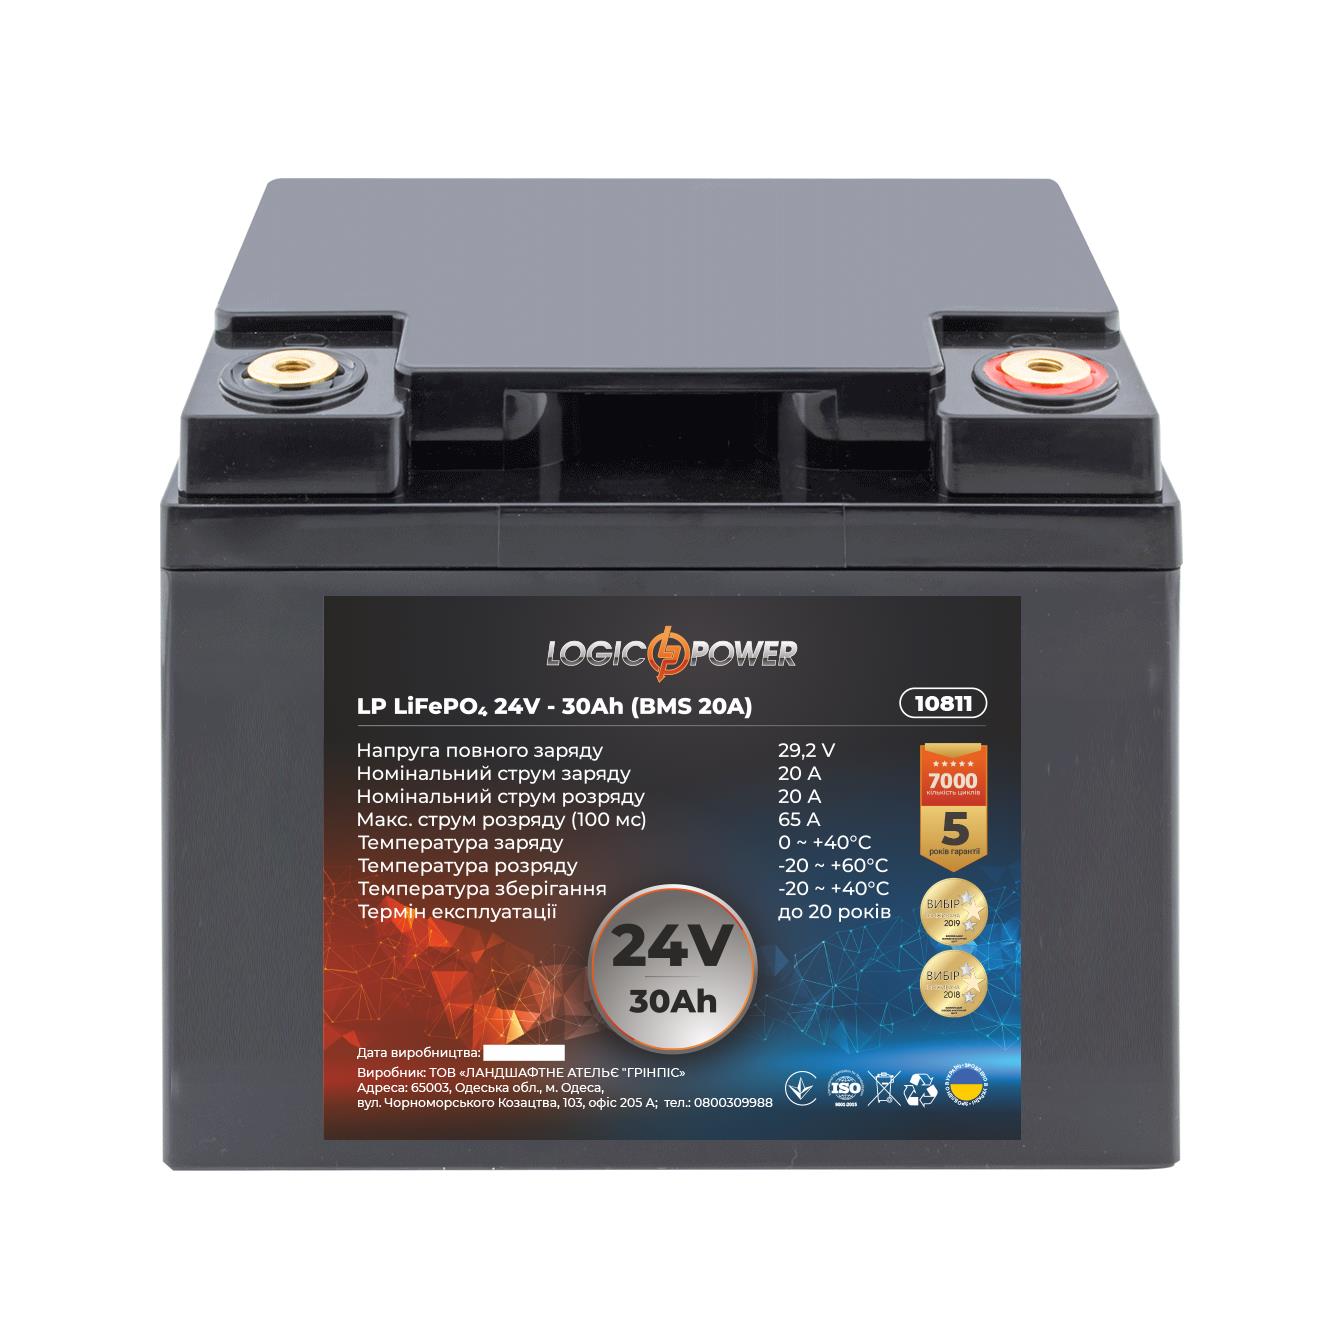 Аккумулятор литий-железо-фосфатный LogicPower LP LiFePO4 24V - 30 Ah (BMS 20A) пластик (10811) в интернет-магазине, главное фото